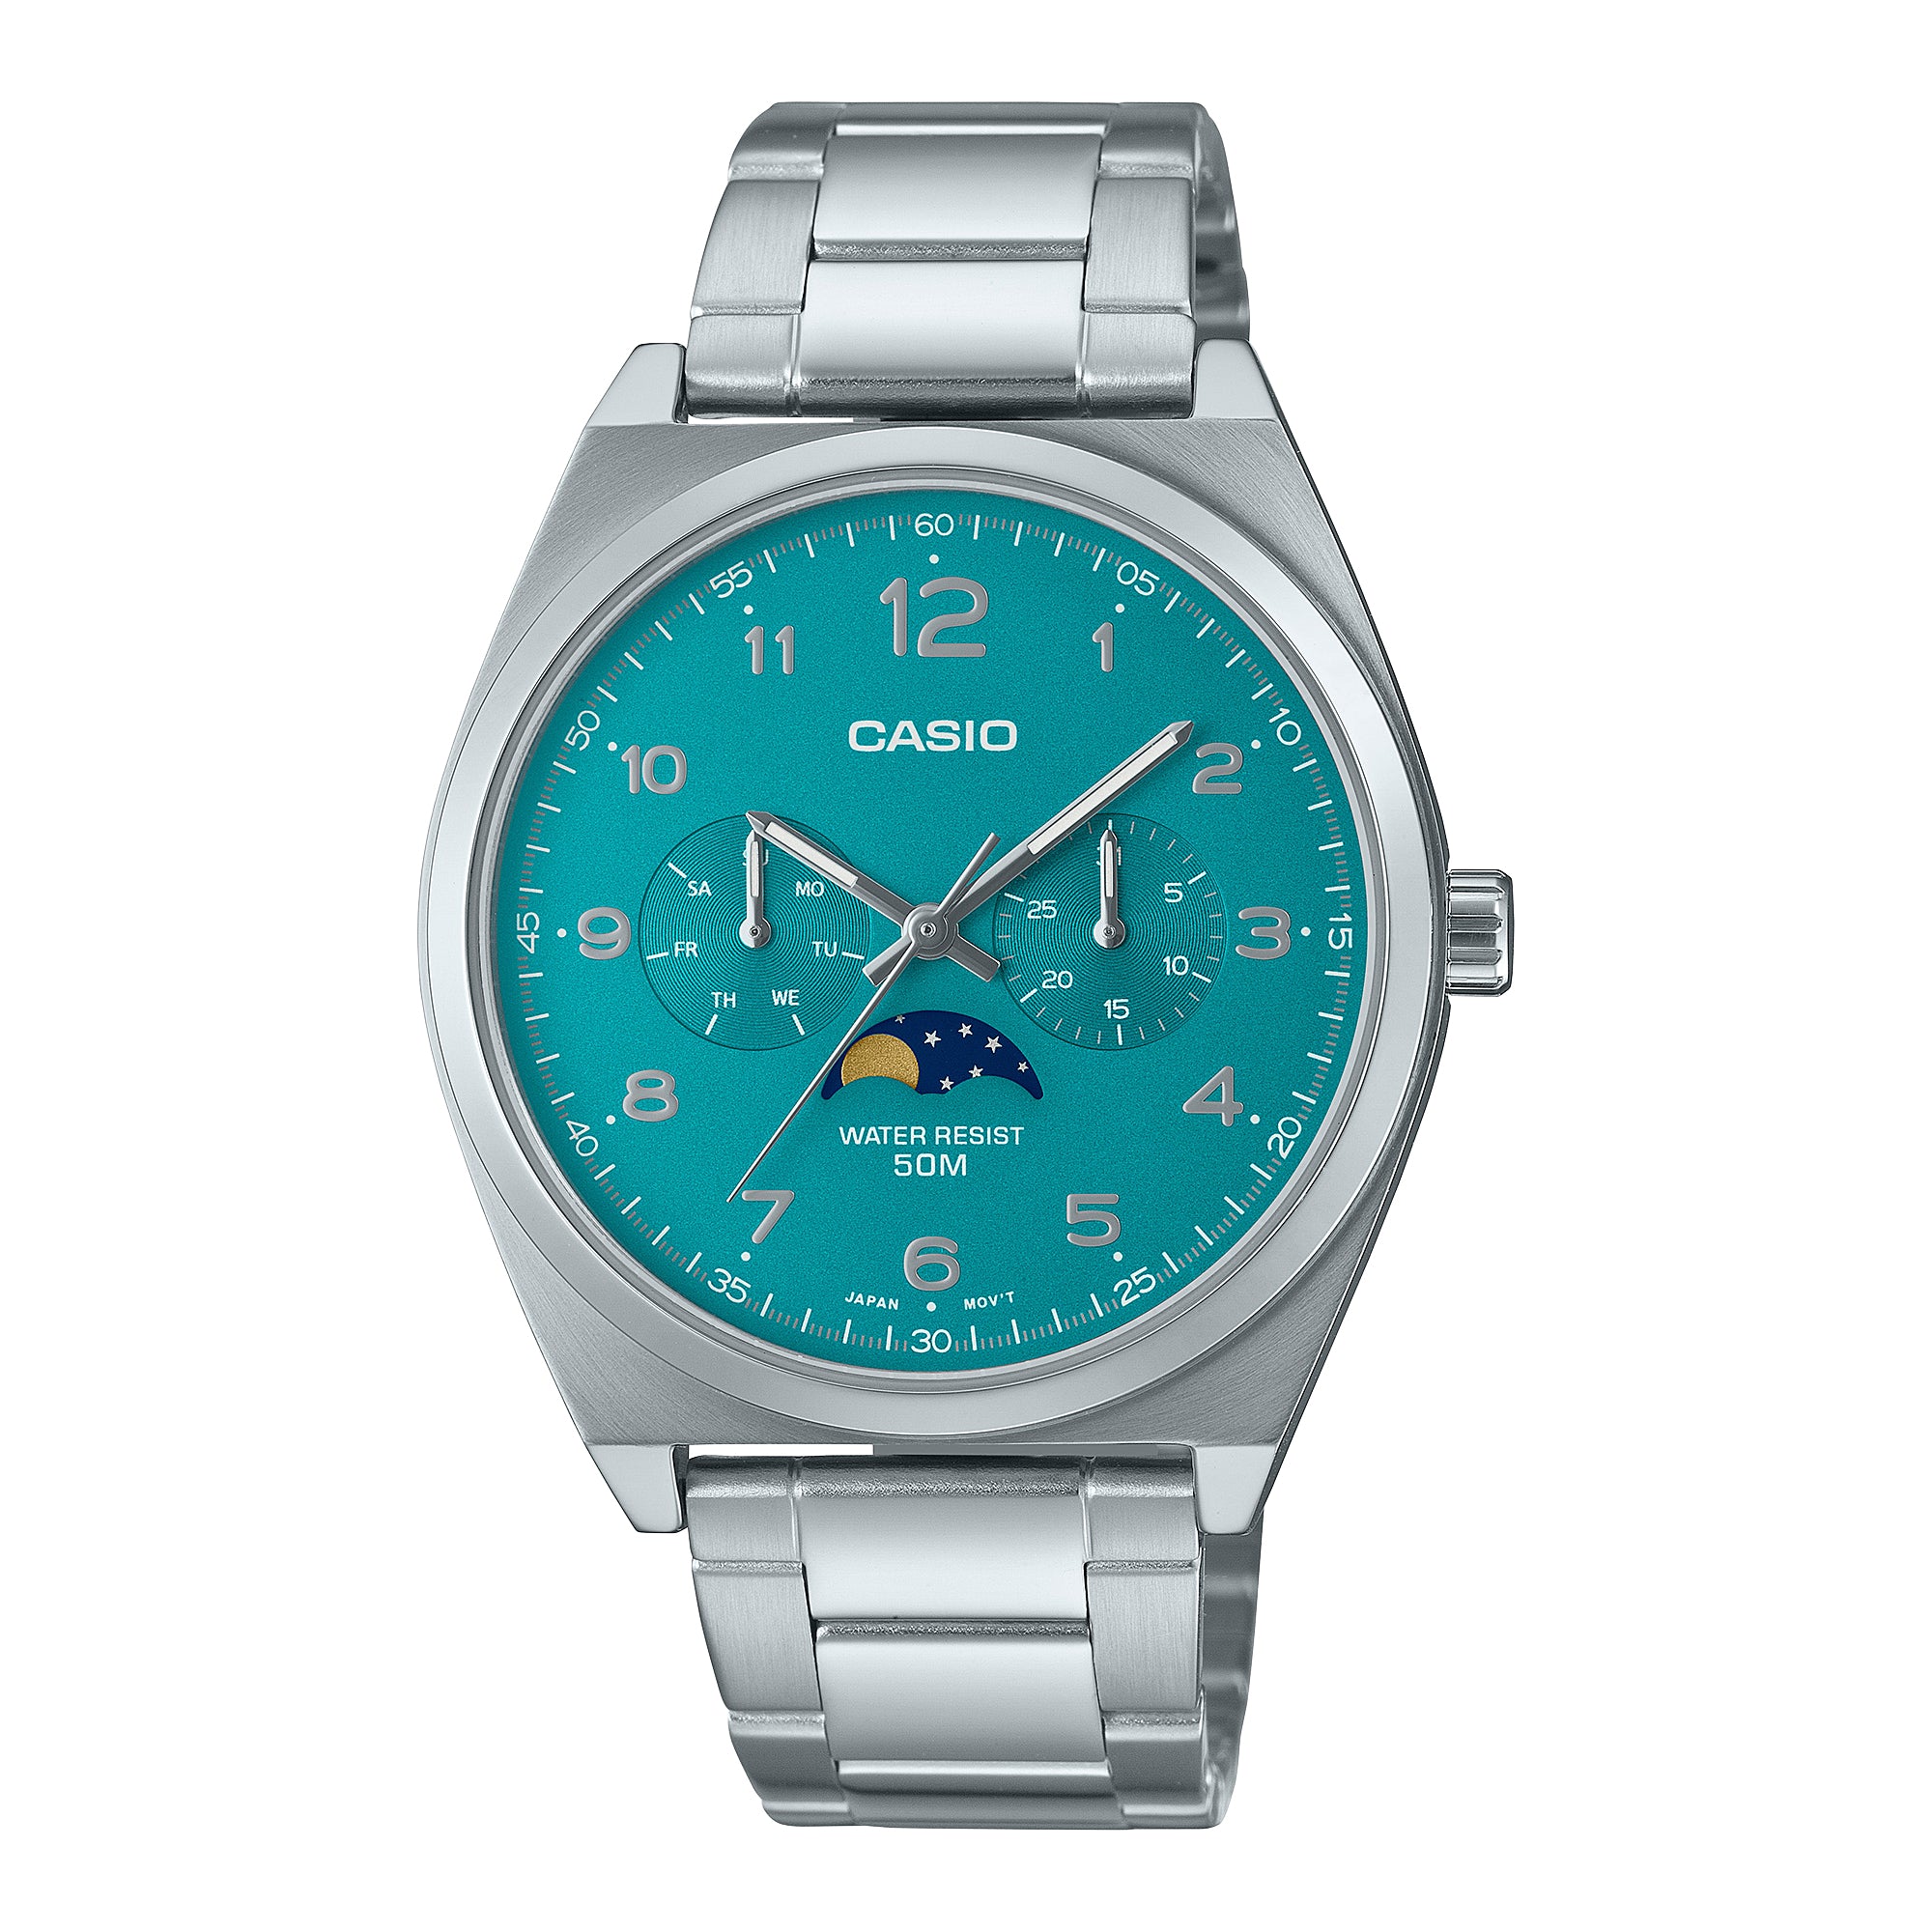 Casio Men's Analog Watch MTPM300D-3A MTP-M300D-3A